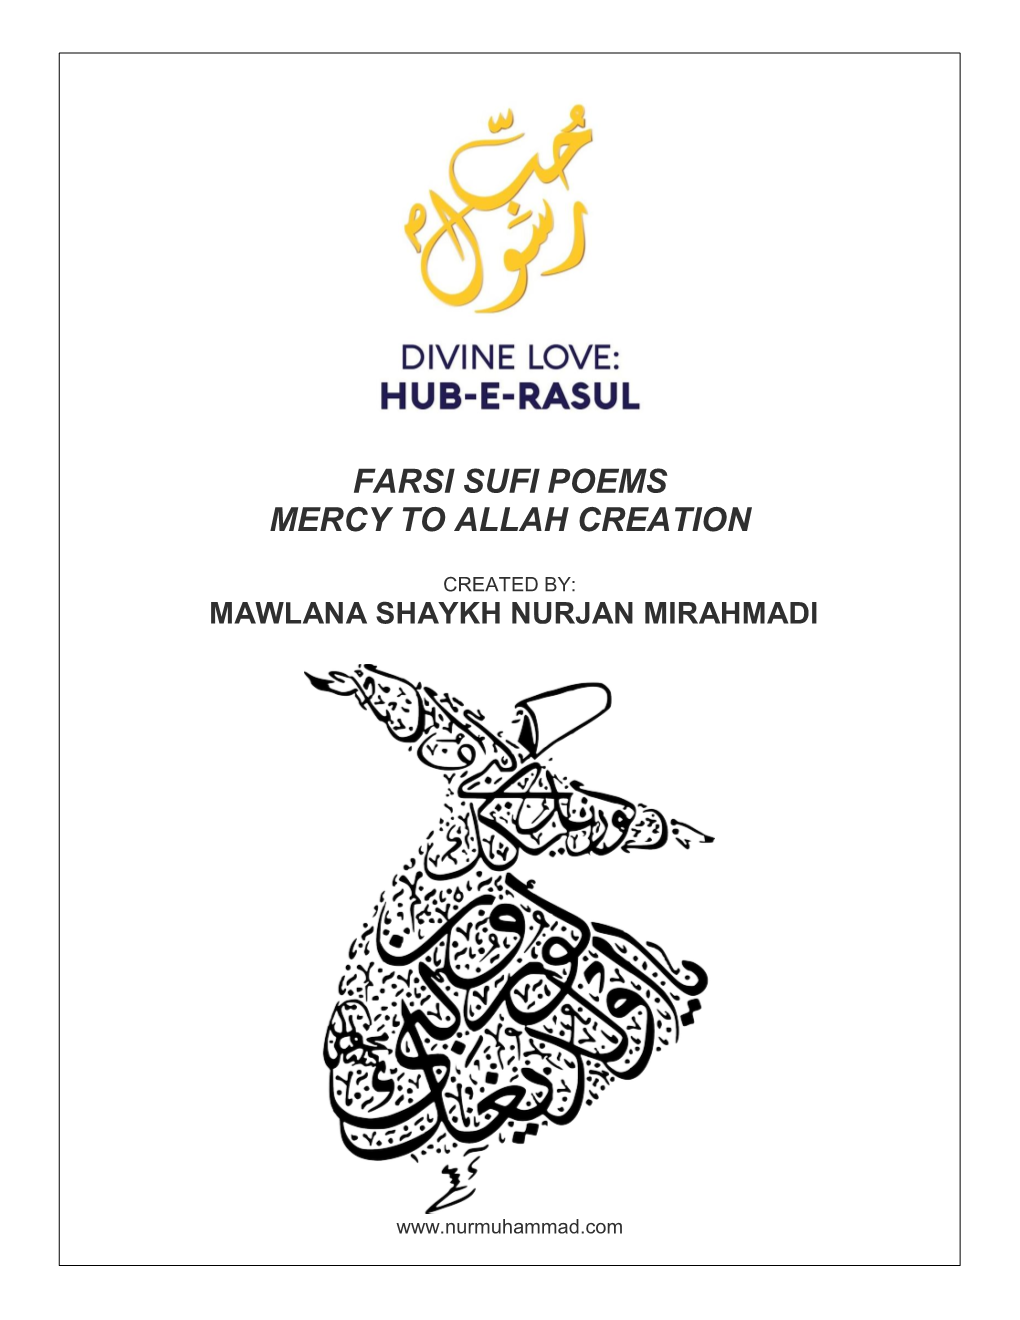 Farsi Sufi Poems Mercy to Allah Creation